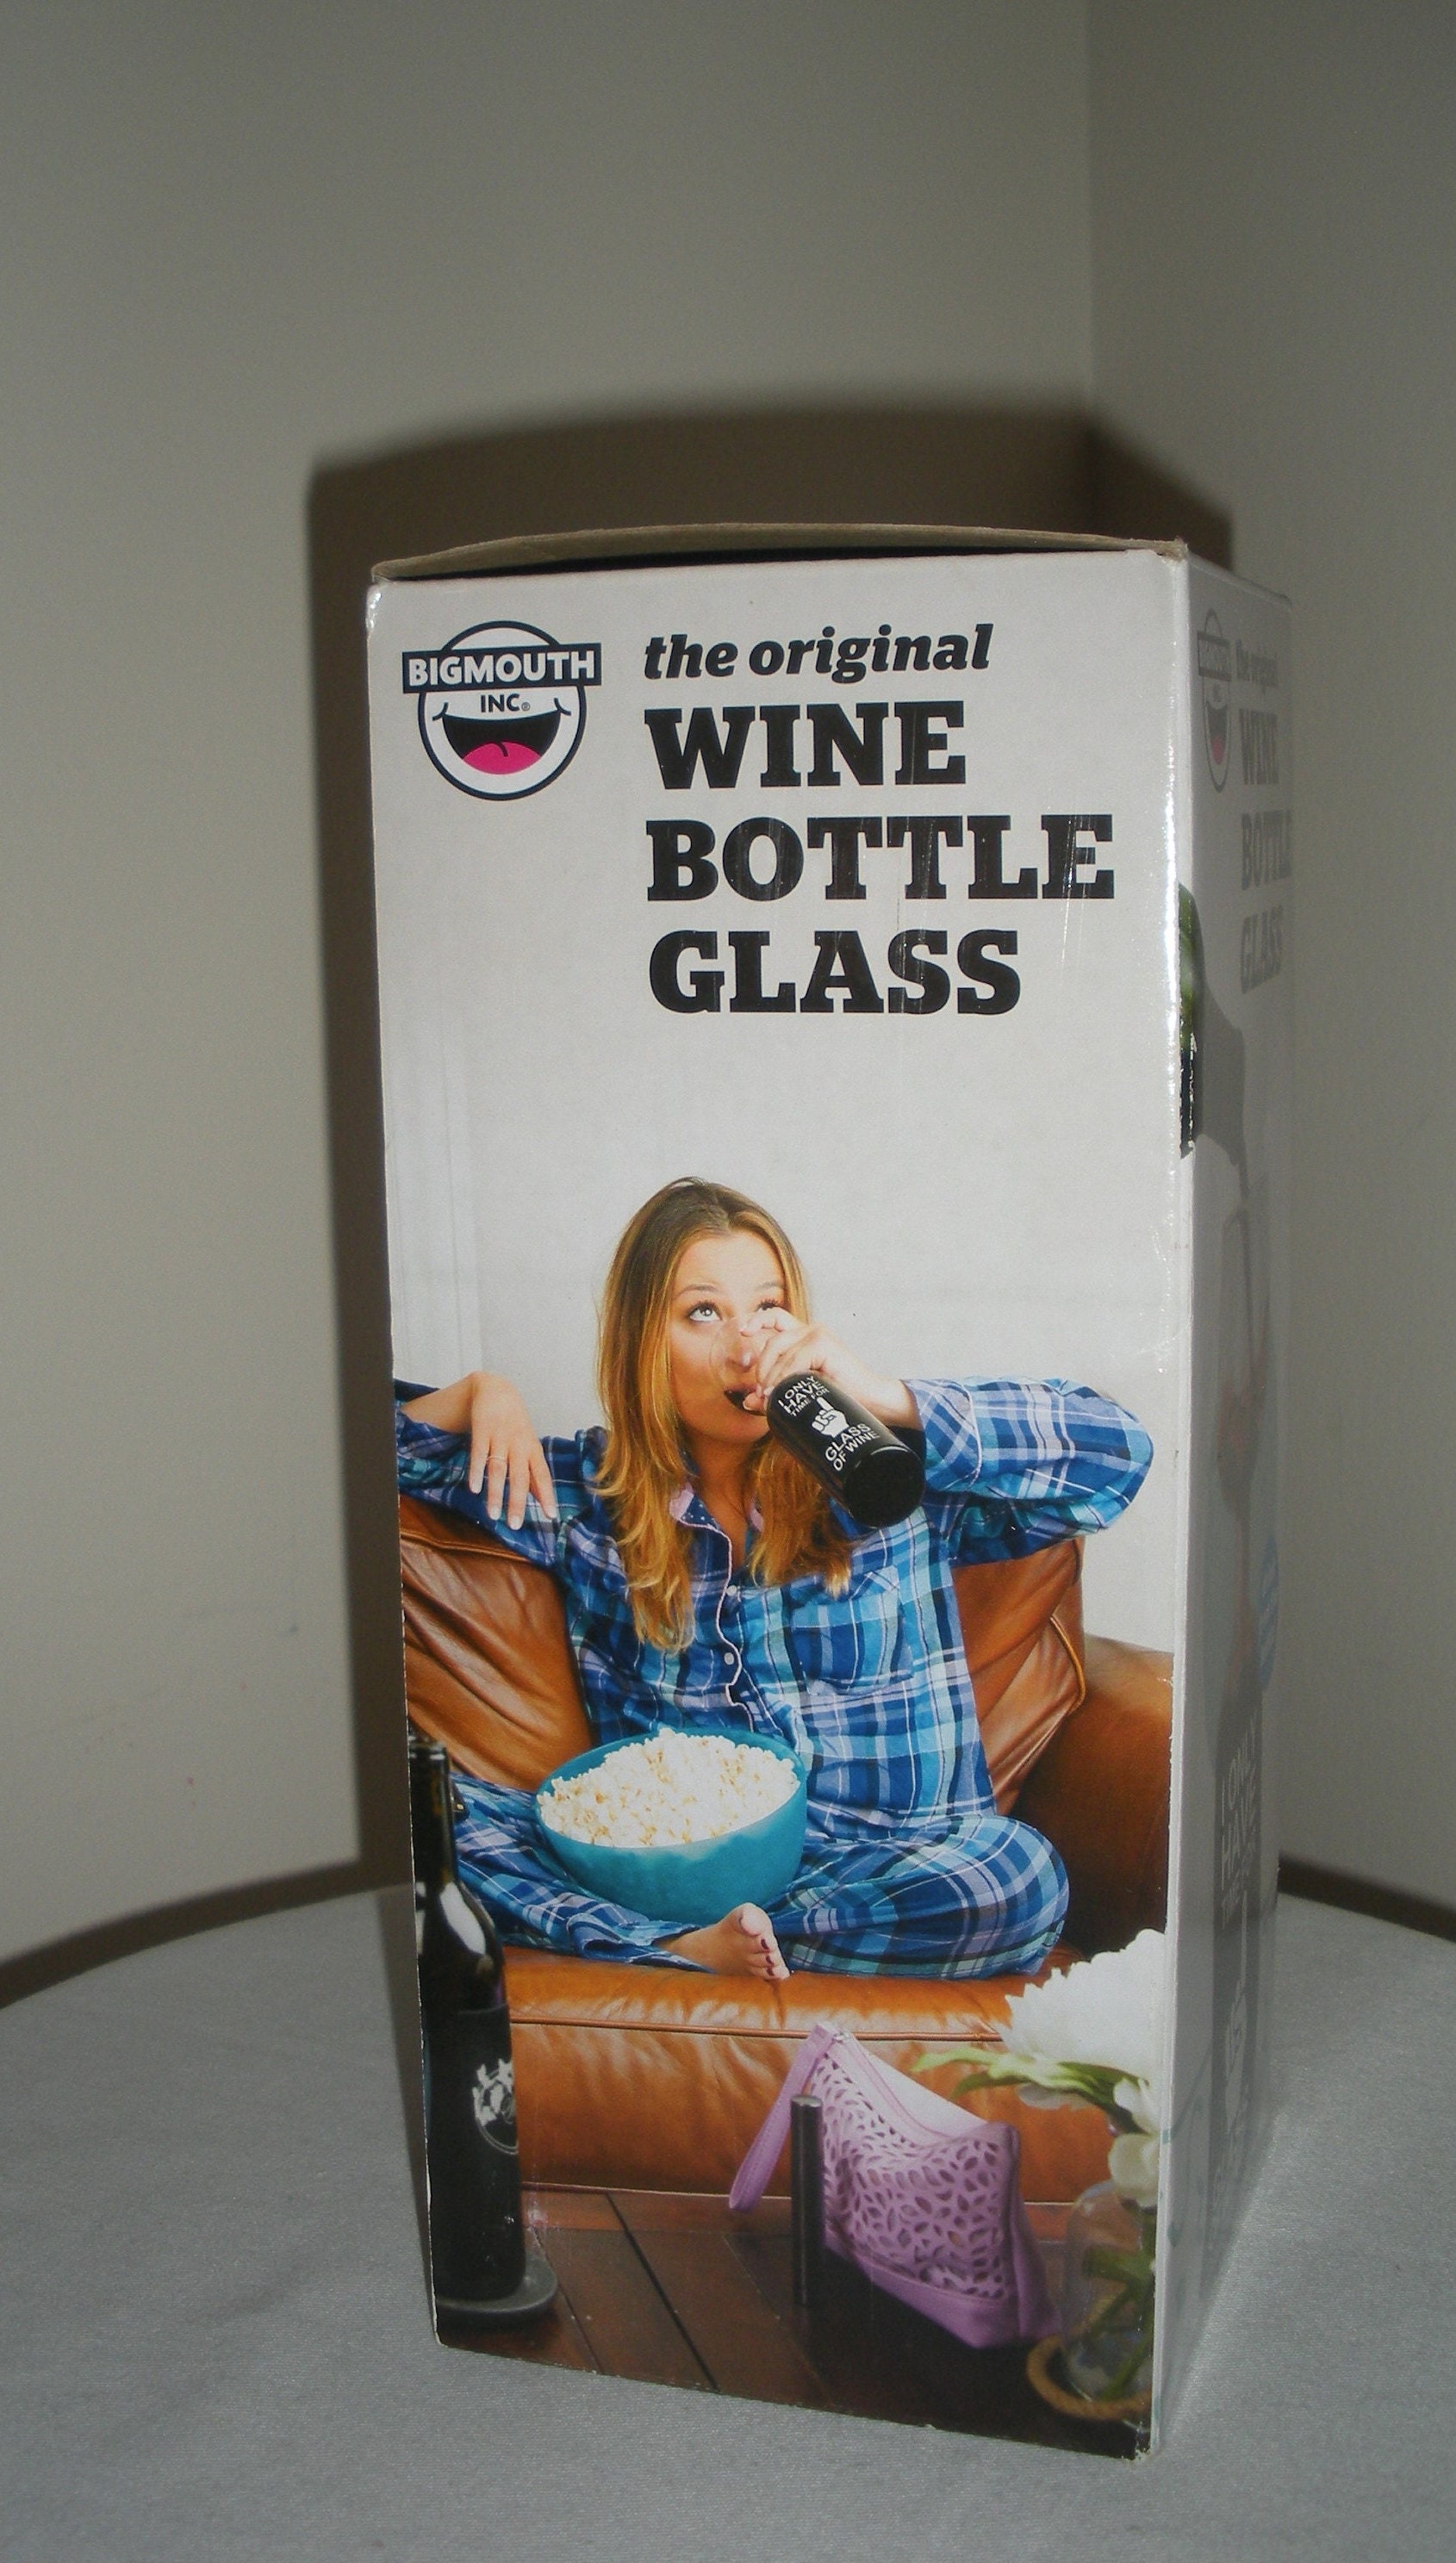 BigMouth Inc. Original I Need a Huge Glass of Wine, Large Wine Glass, 750 mL